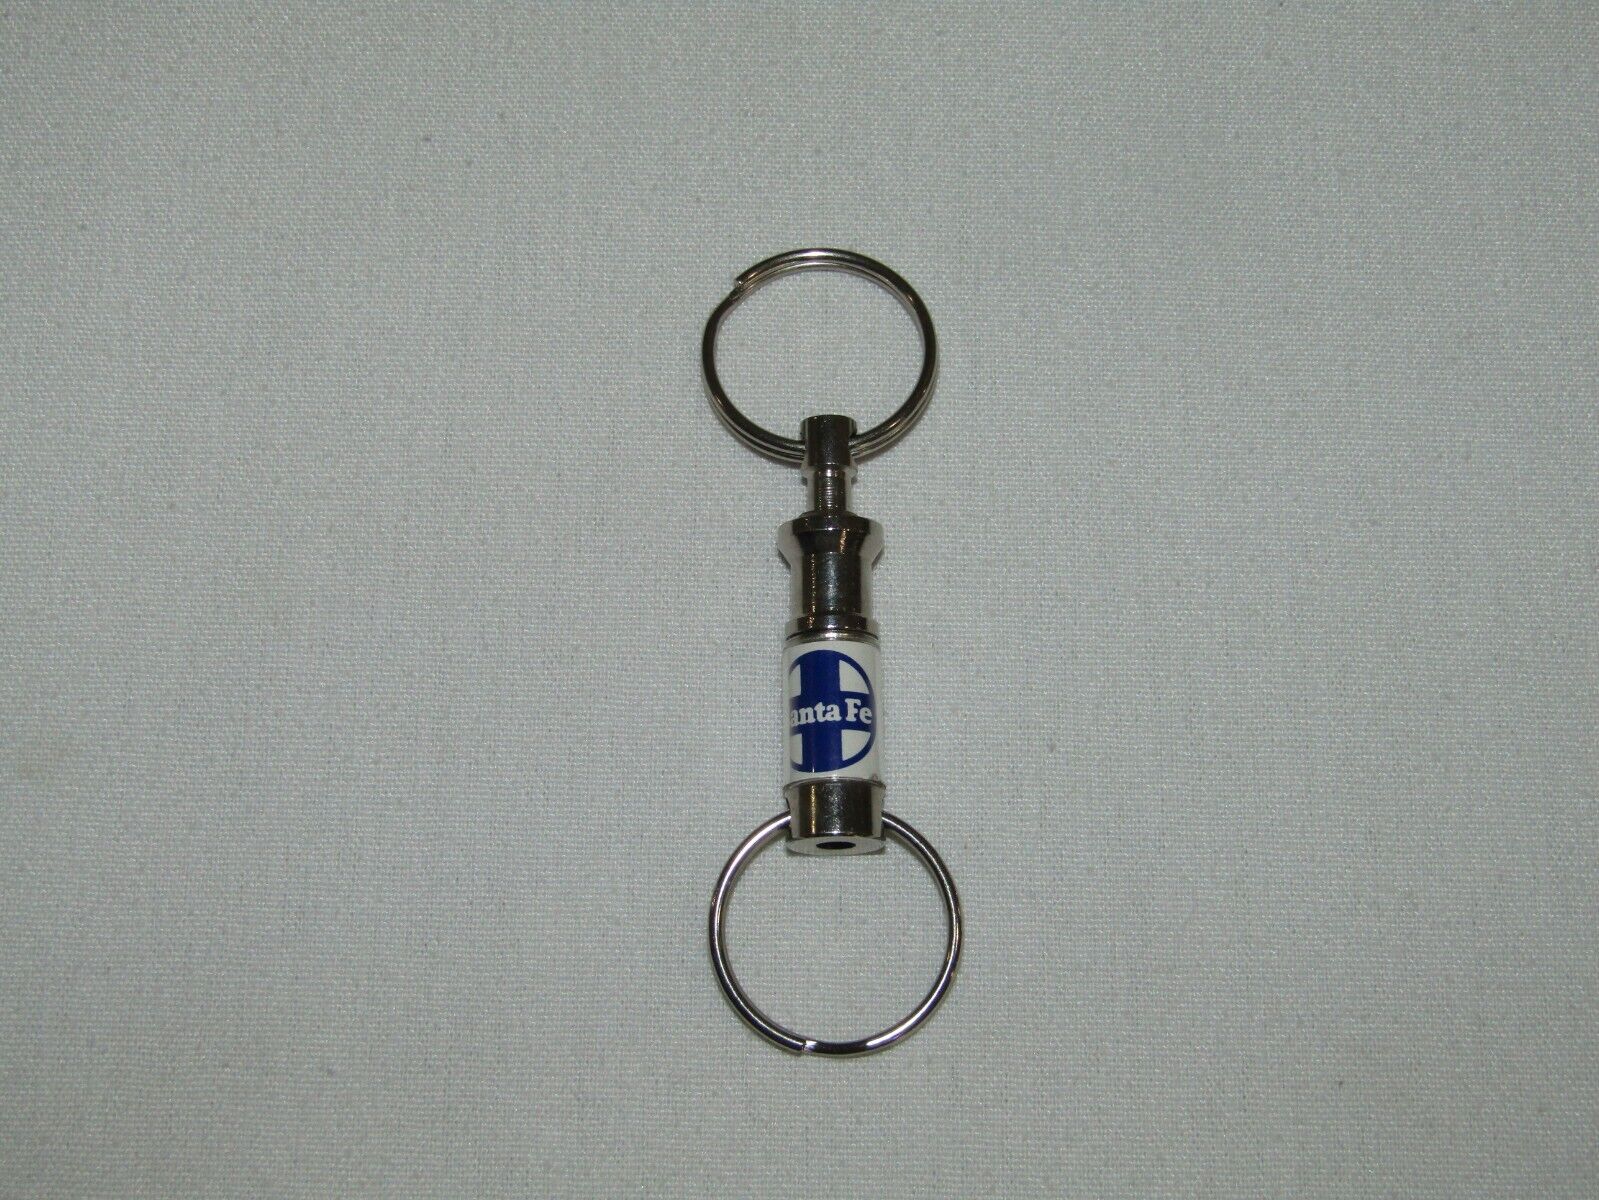 Vintage Santa Fe Railroad Keychain Push Release Key Ring